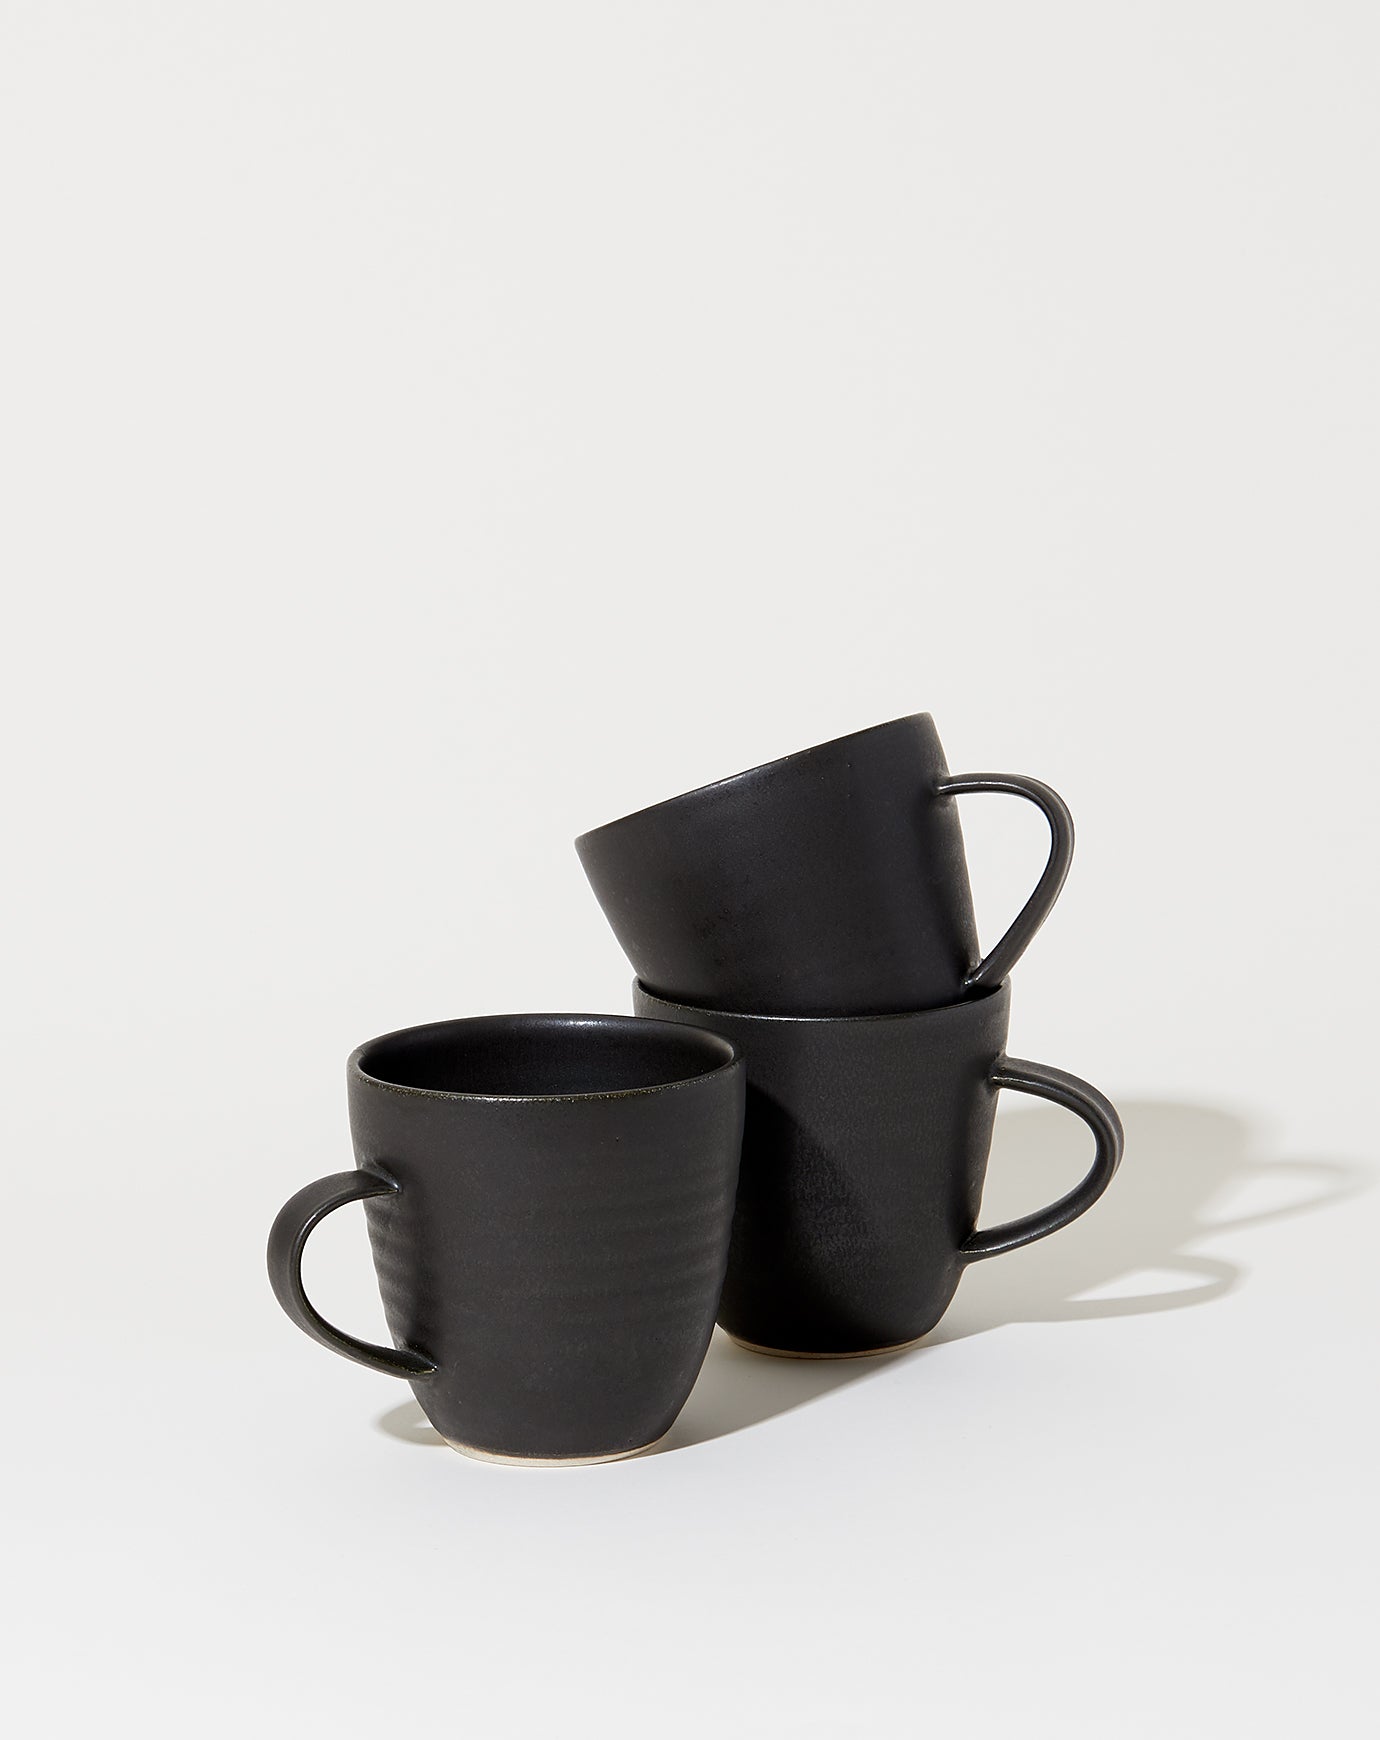 Sherldon Ceramics Farmhouse Coffee Mug in Satin Black